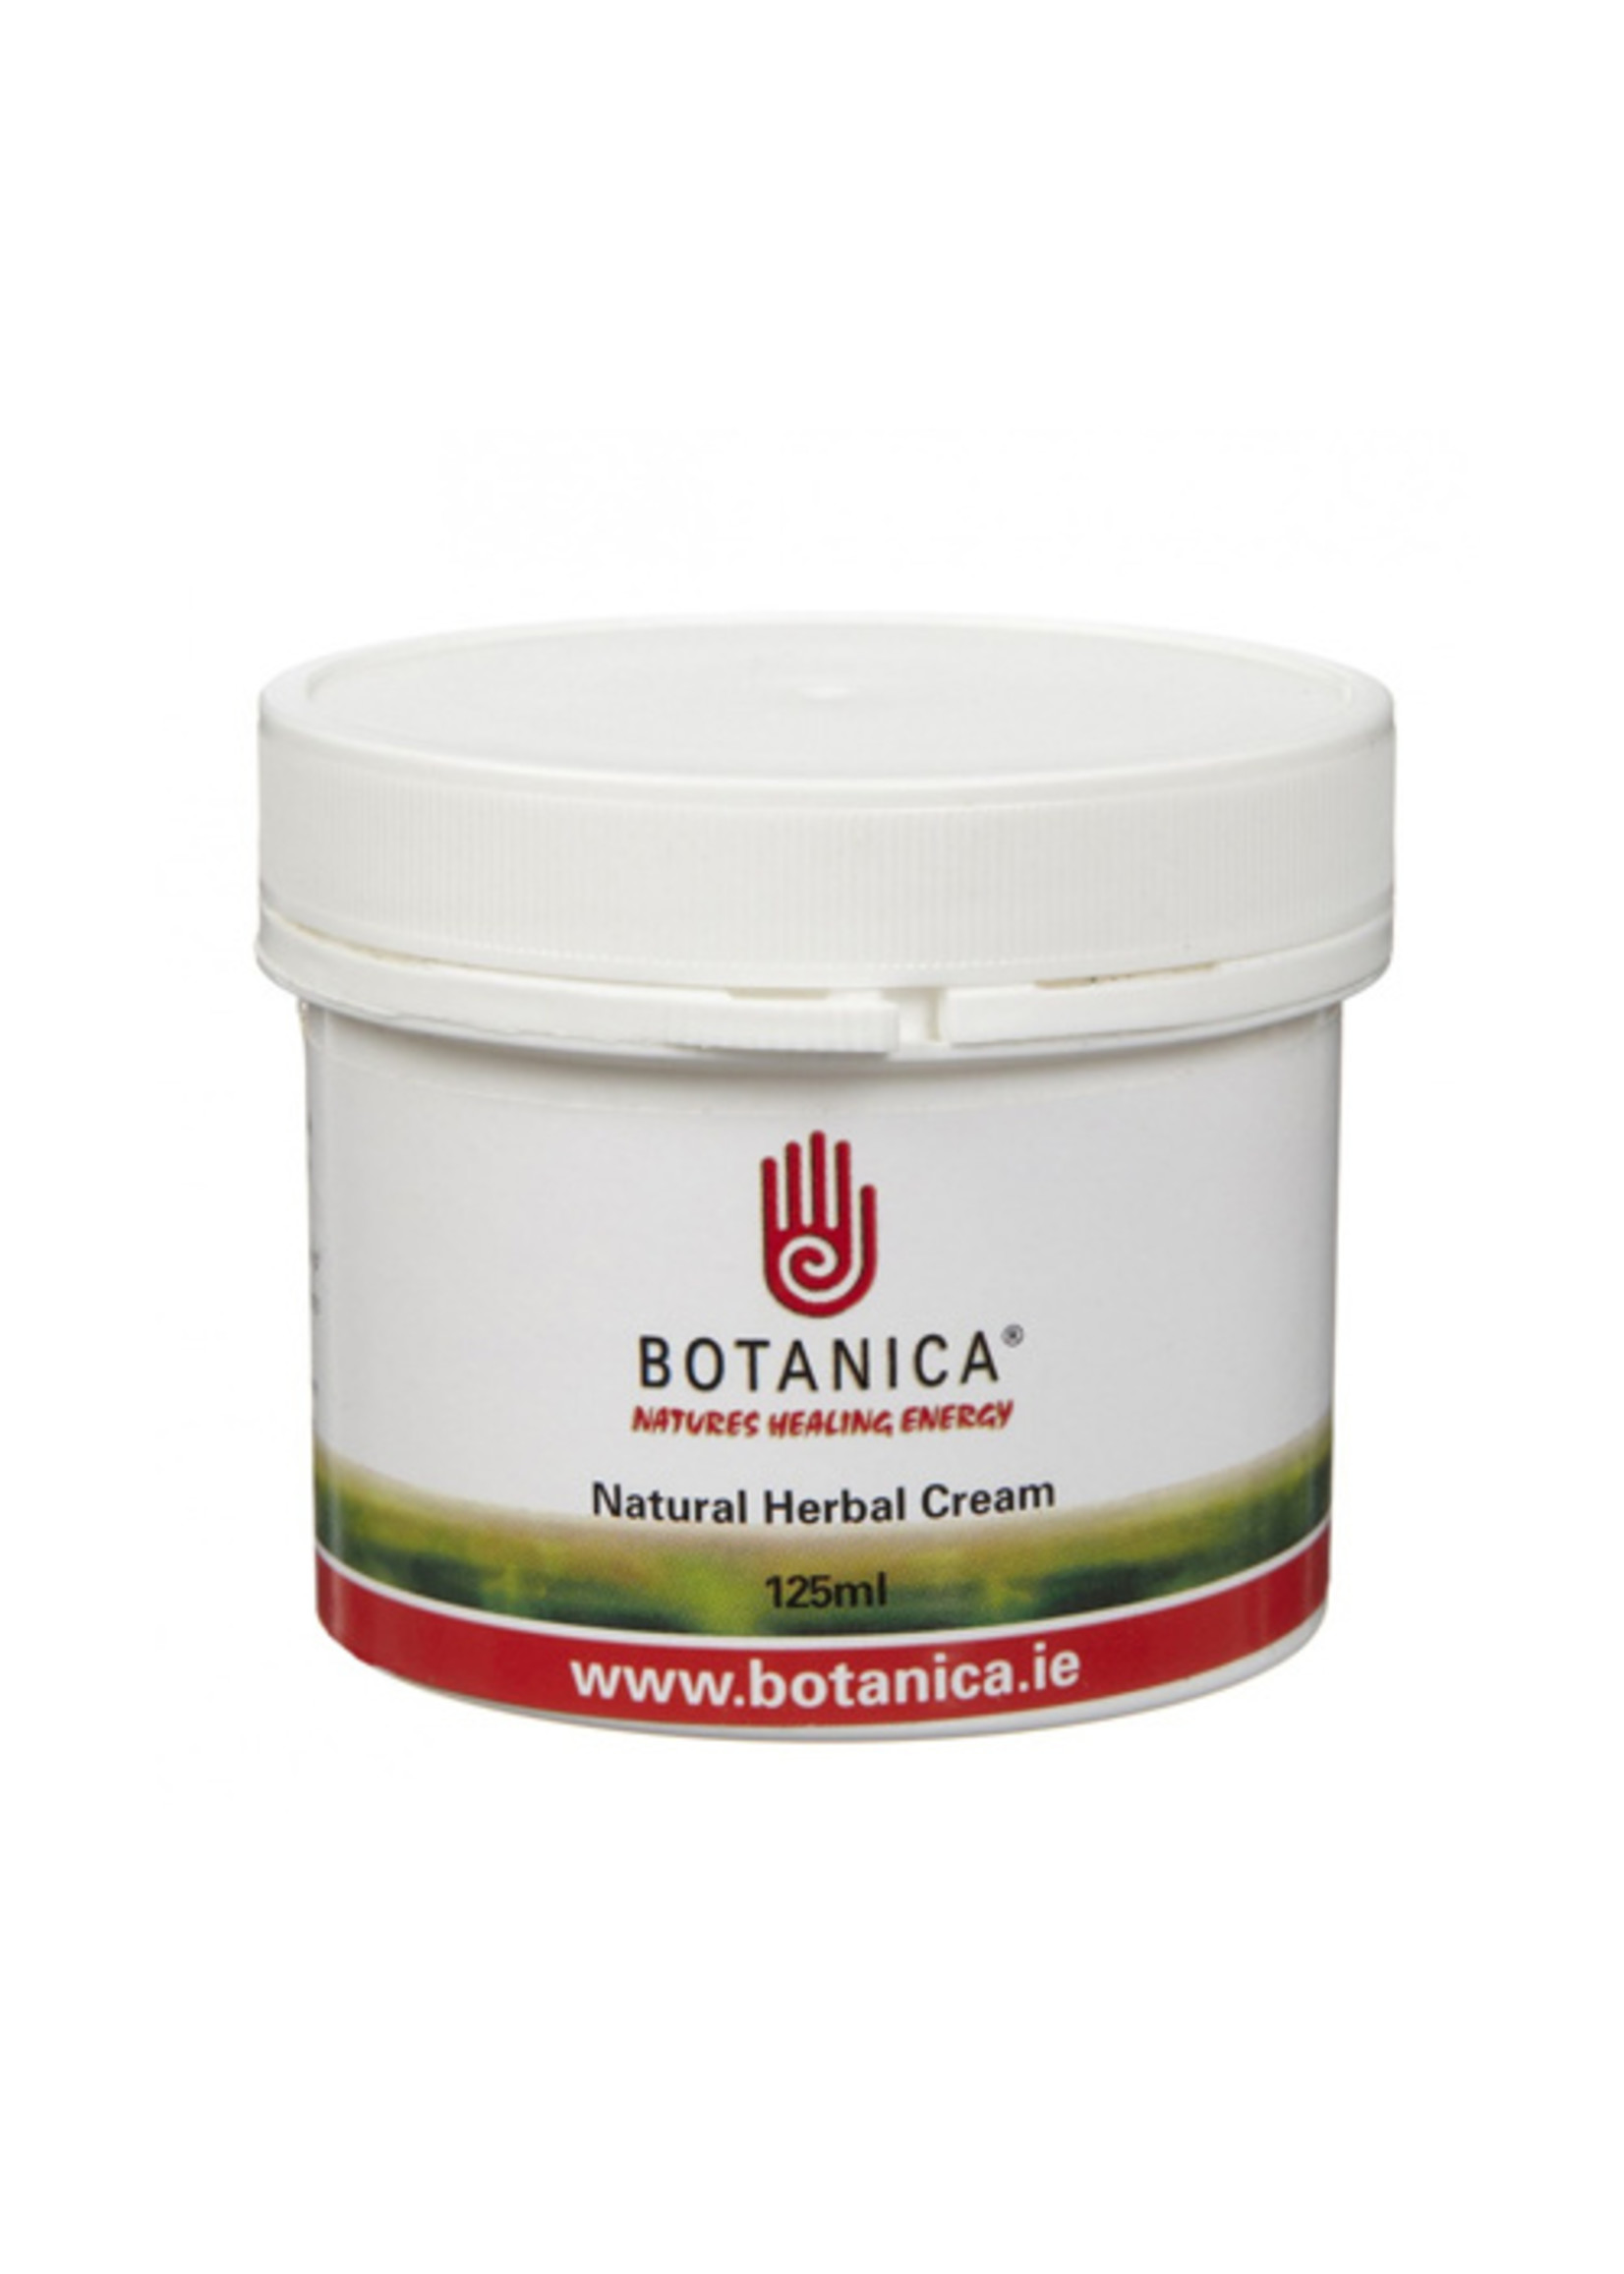 Botanica Botanica Natural Herbal Cream